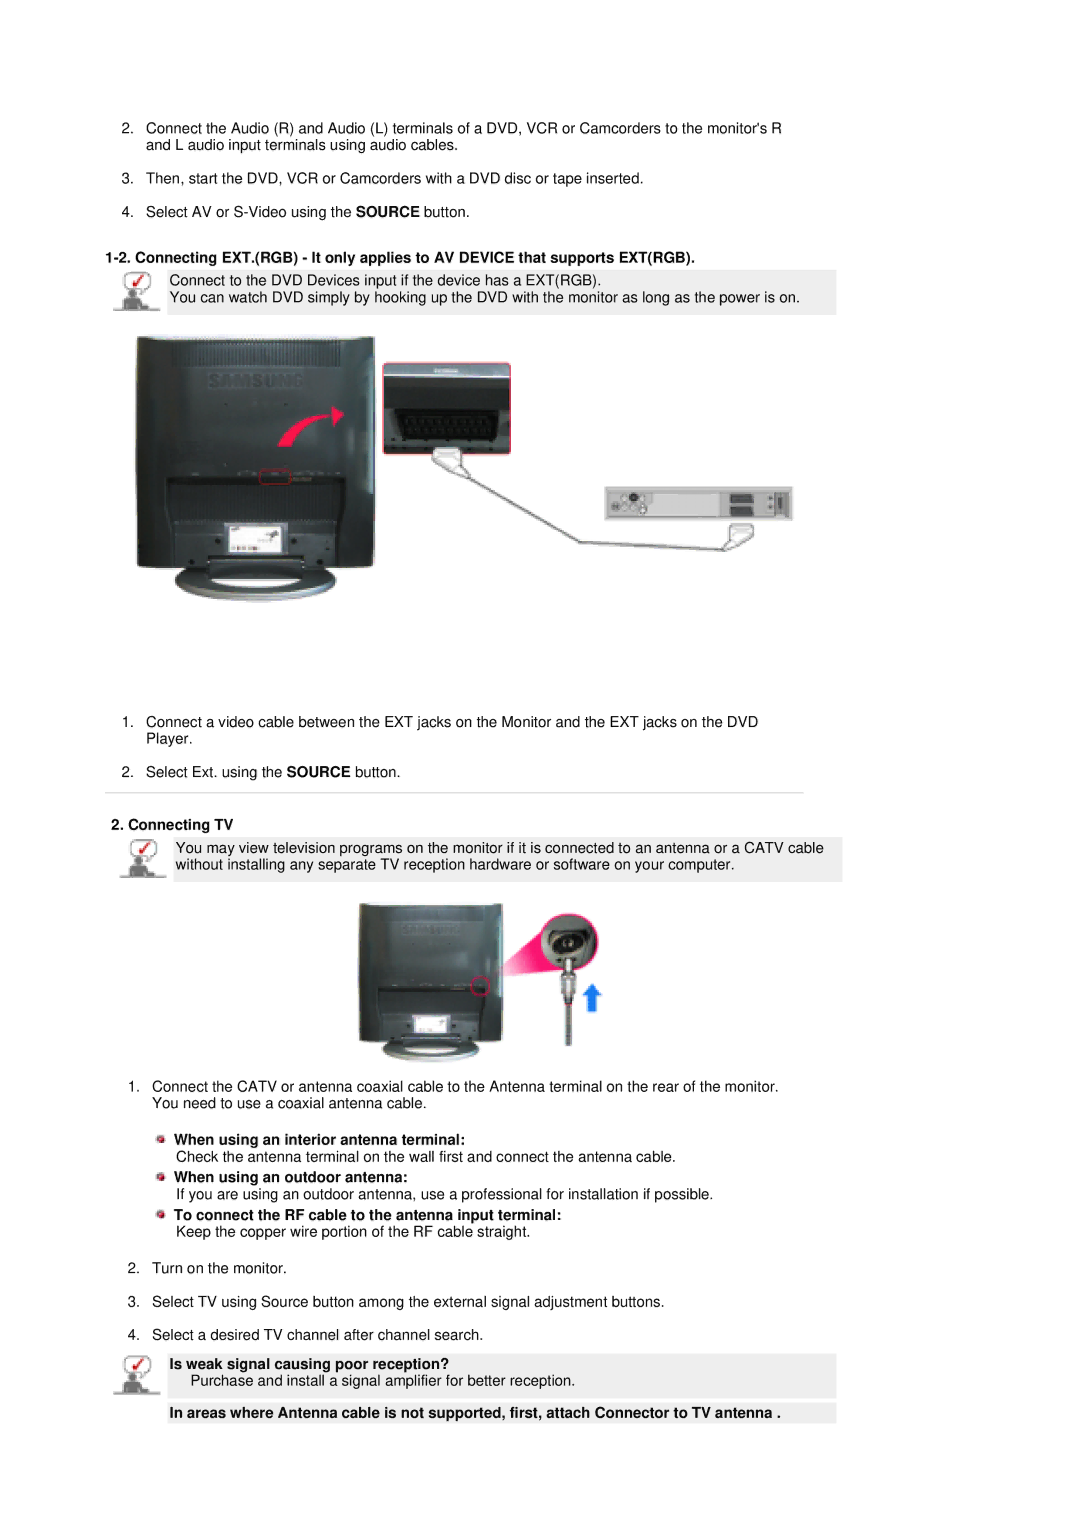 Samsung MZ19FSSS/EDC, LS19MZFSS/SAI Connecting TV, When using an interior antenna terminal, When using an outdoor antenna 